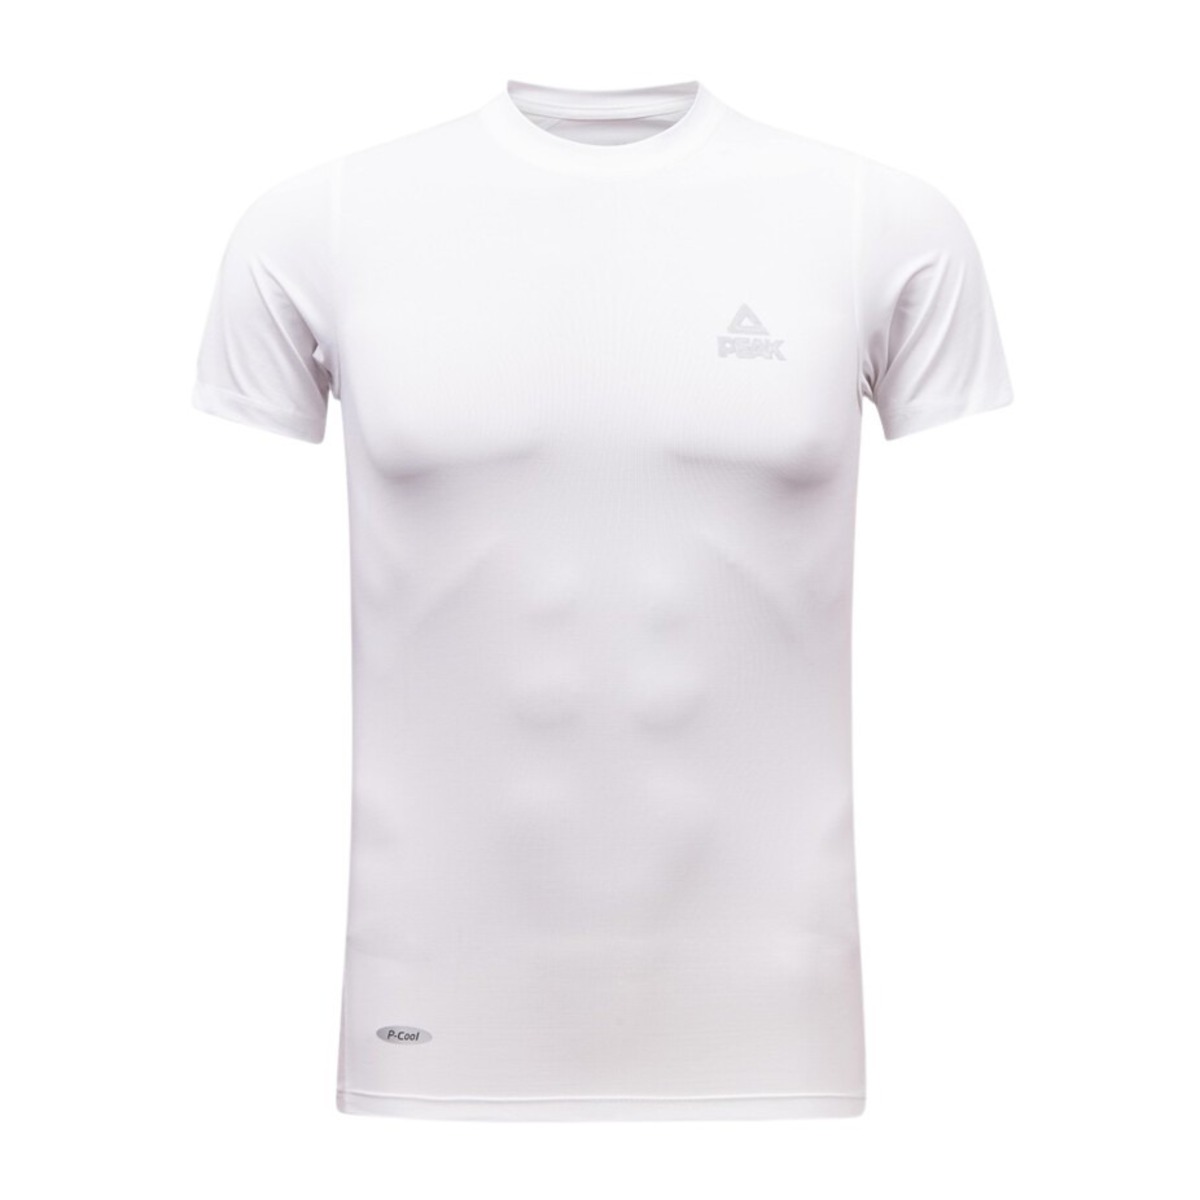 T-shirt De Compressão Peak P-cool - blanco - 